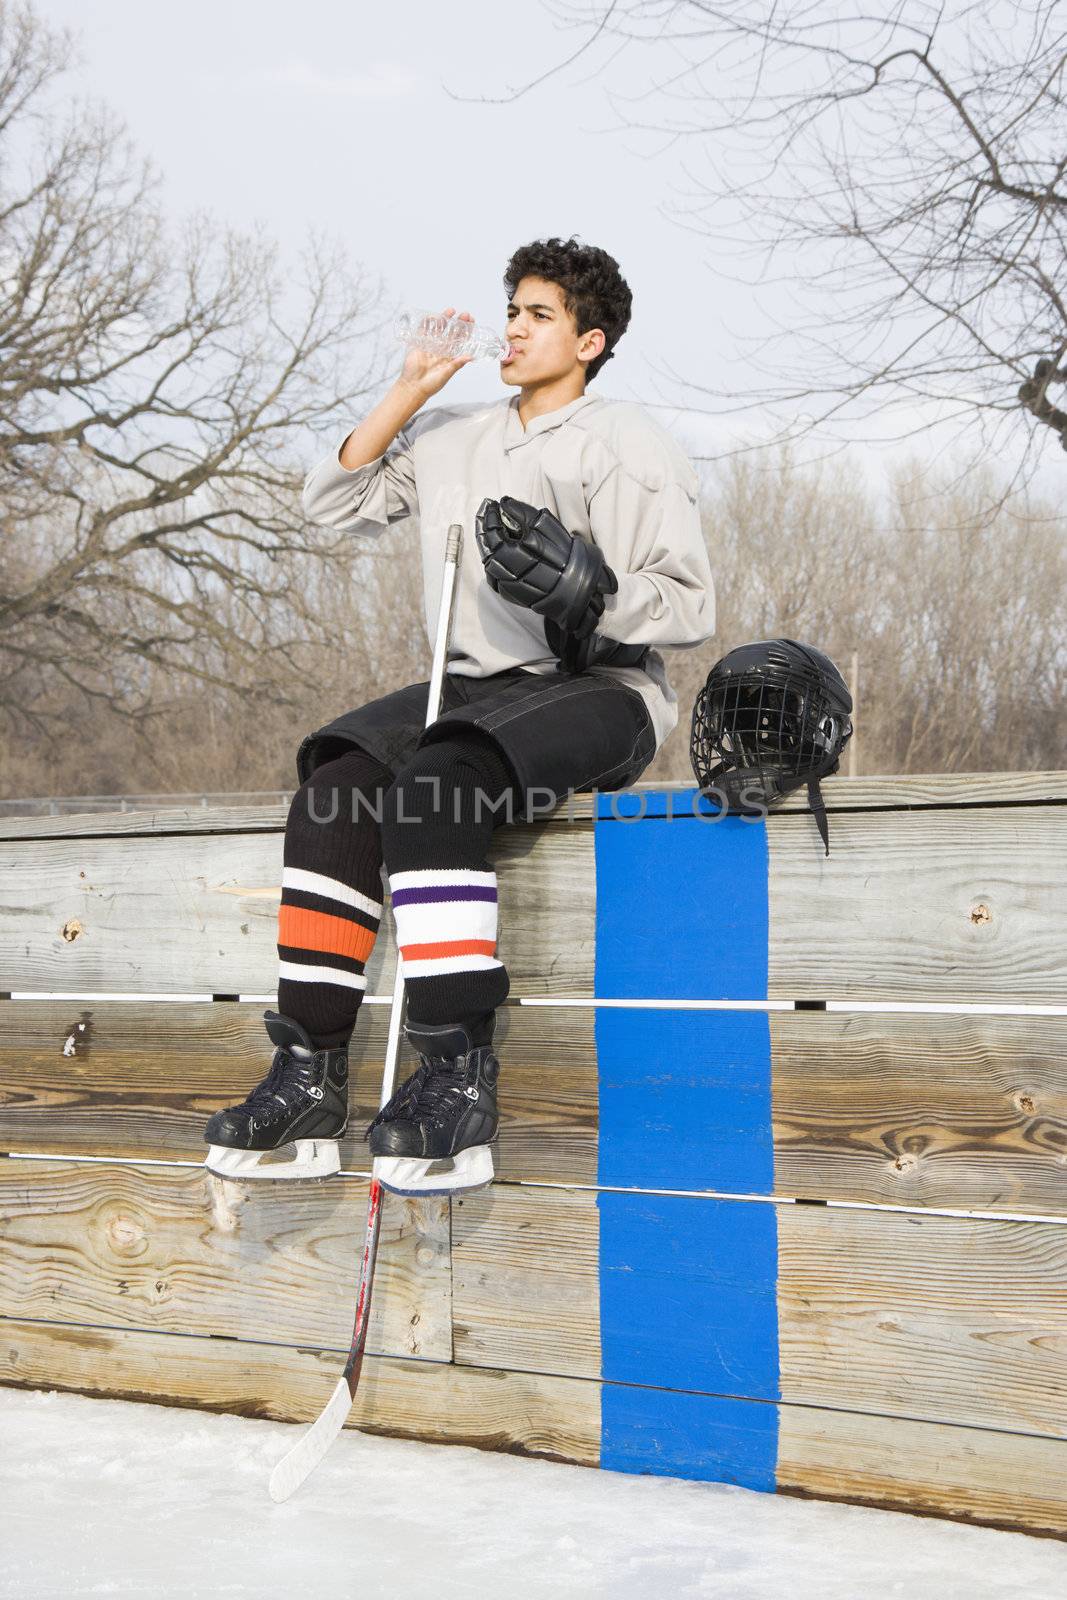 Hockey boy drinking water. by iofoto